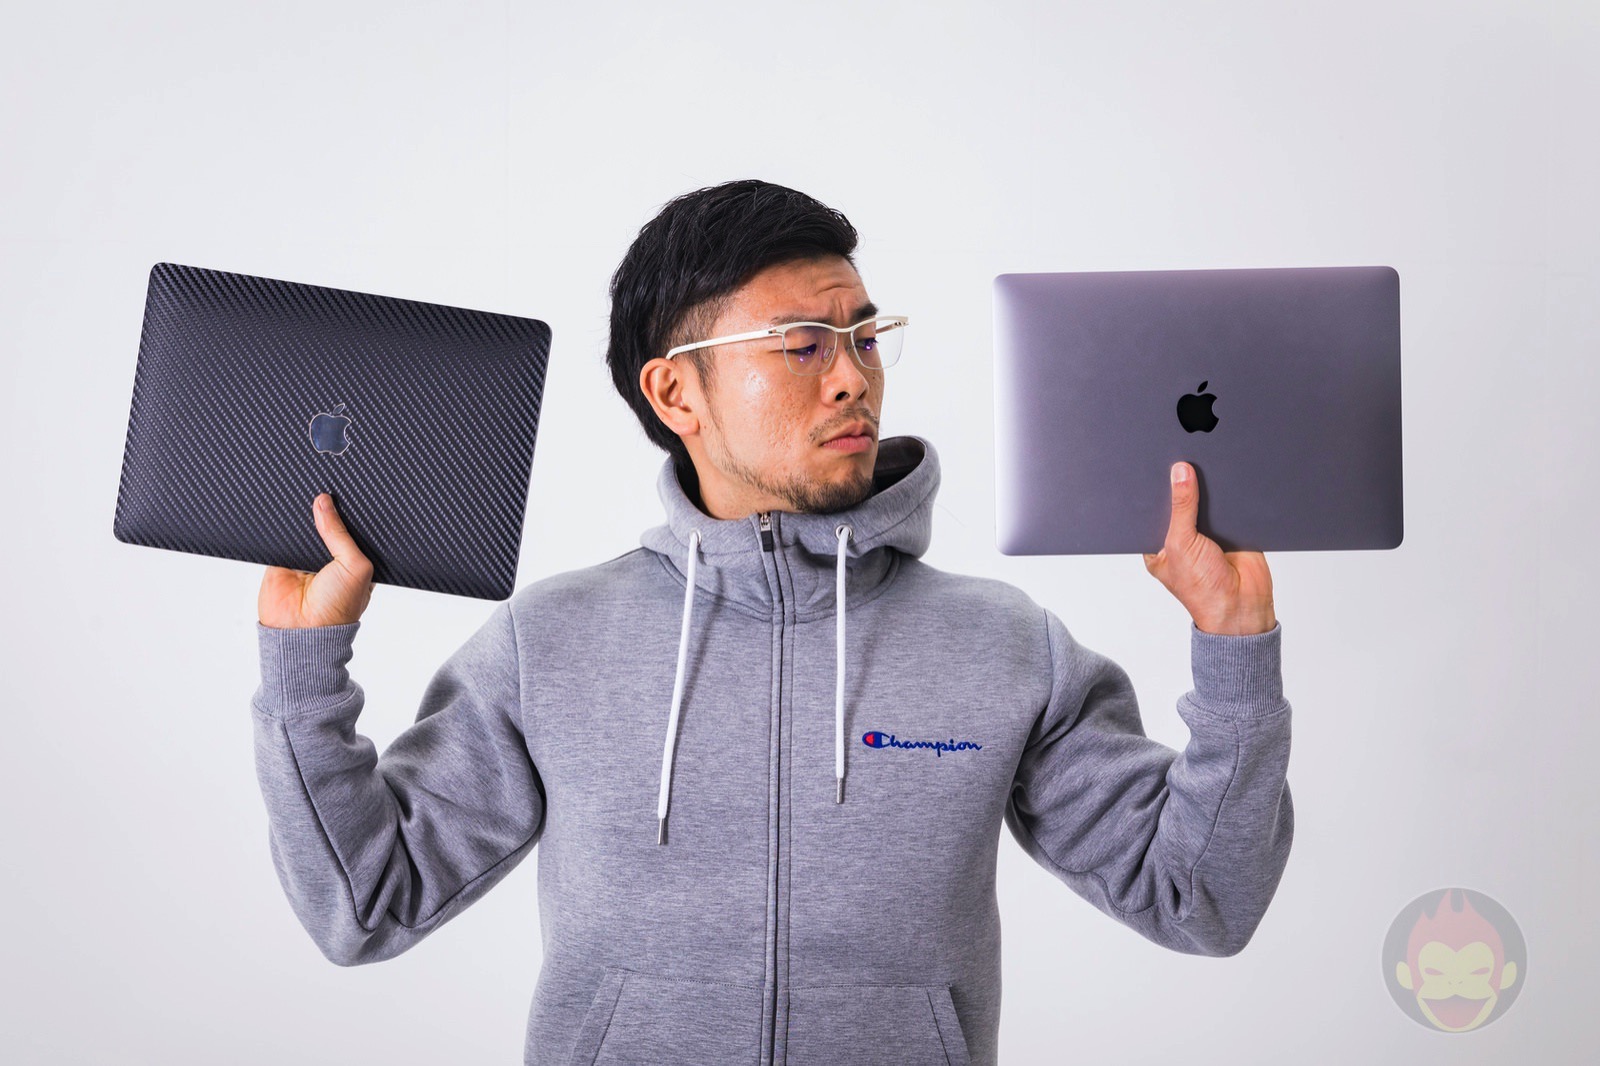 MacBook-Air-2018-Review-04.jpg